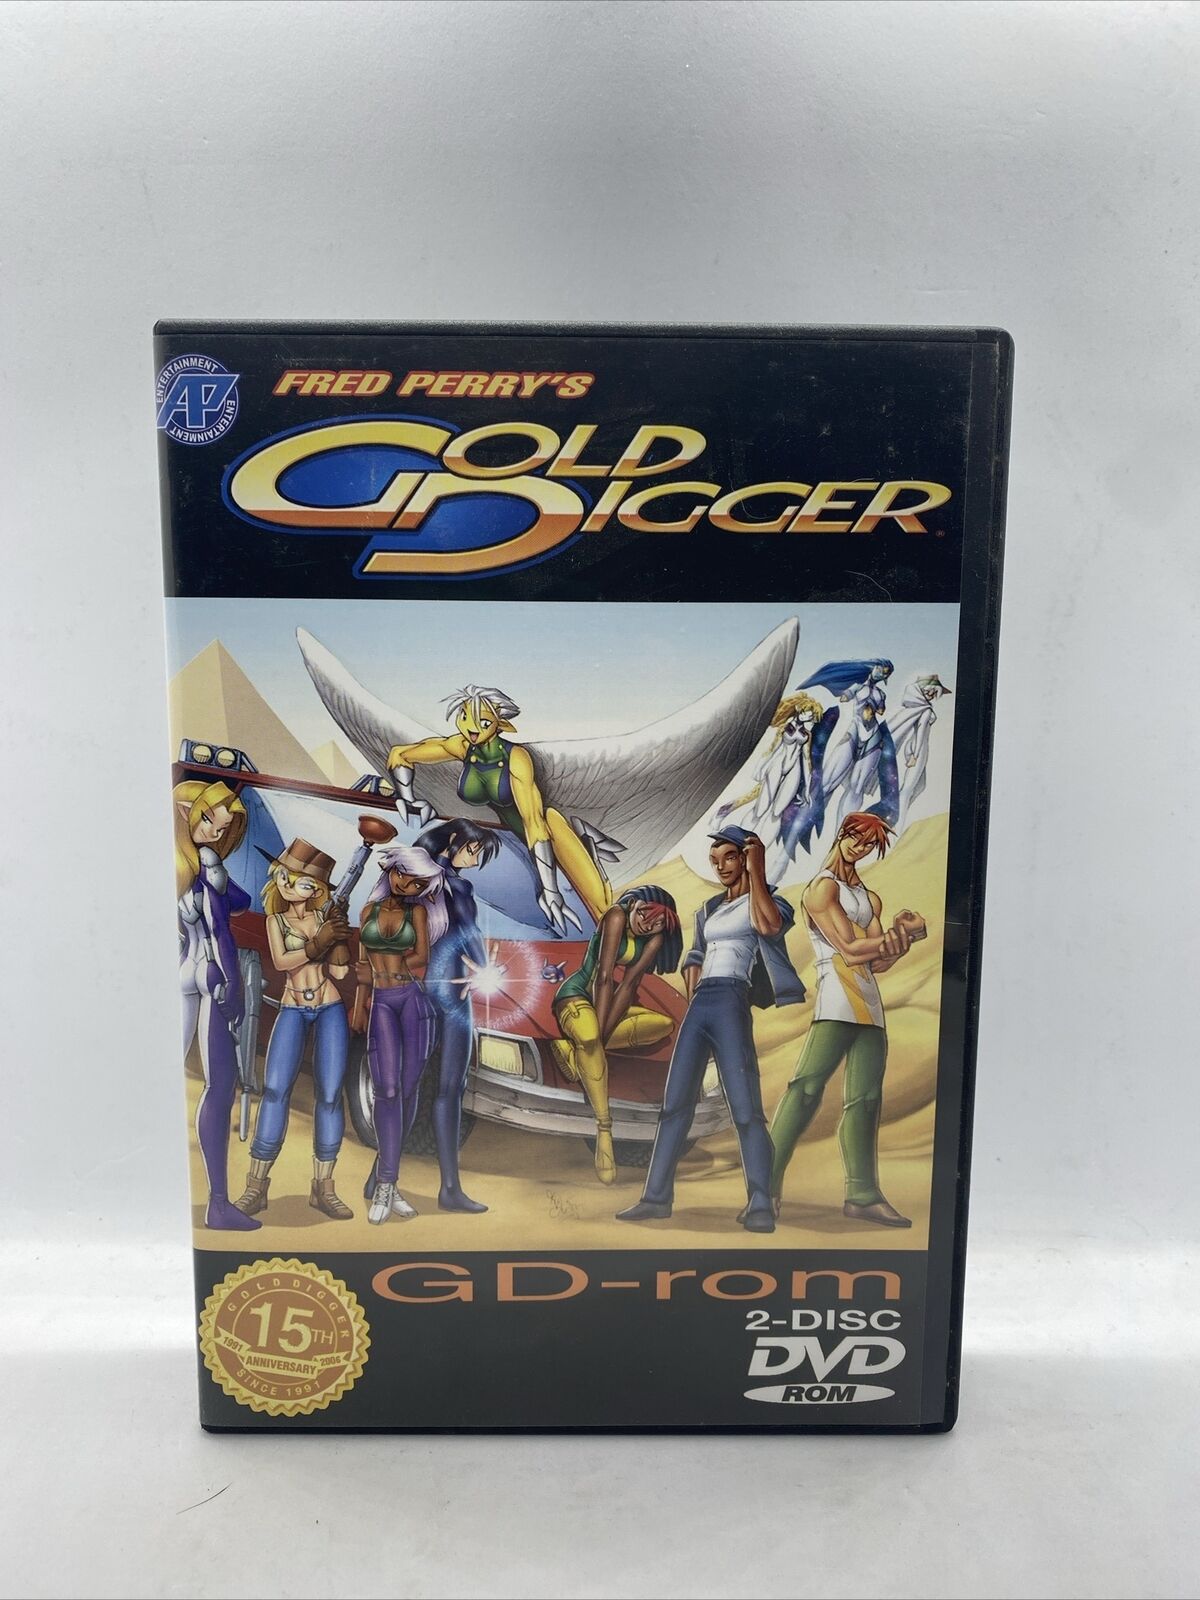 GOLD DIGGER 15th Anniversary 2, DVD-ROM, Antarctic Press, 2-Disc Set 2006.